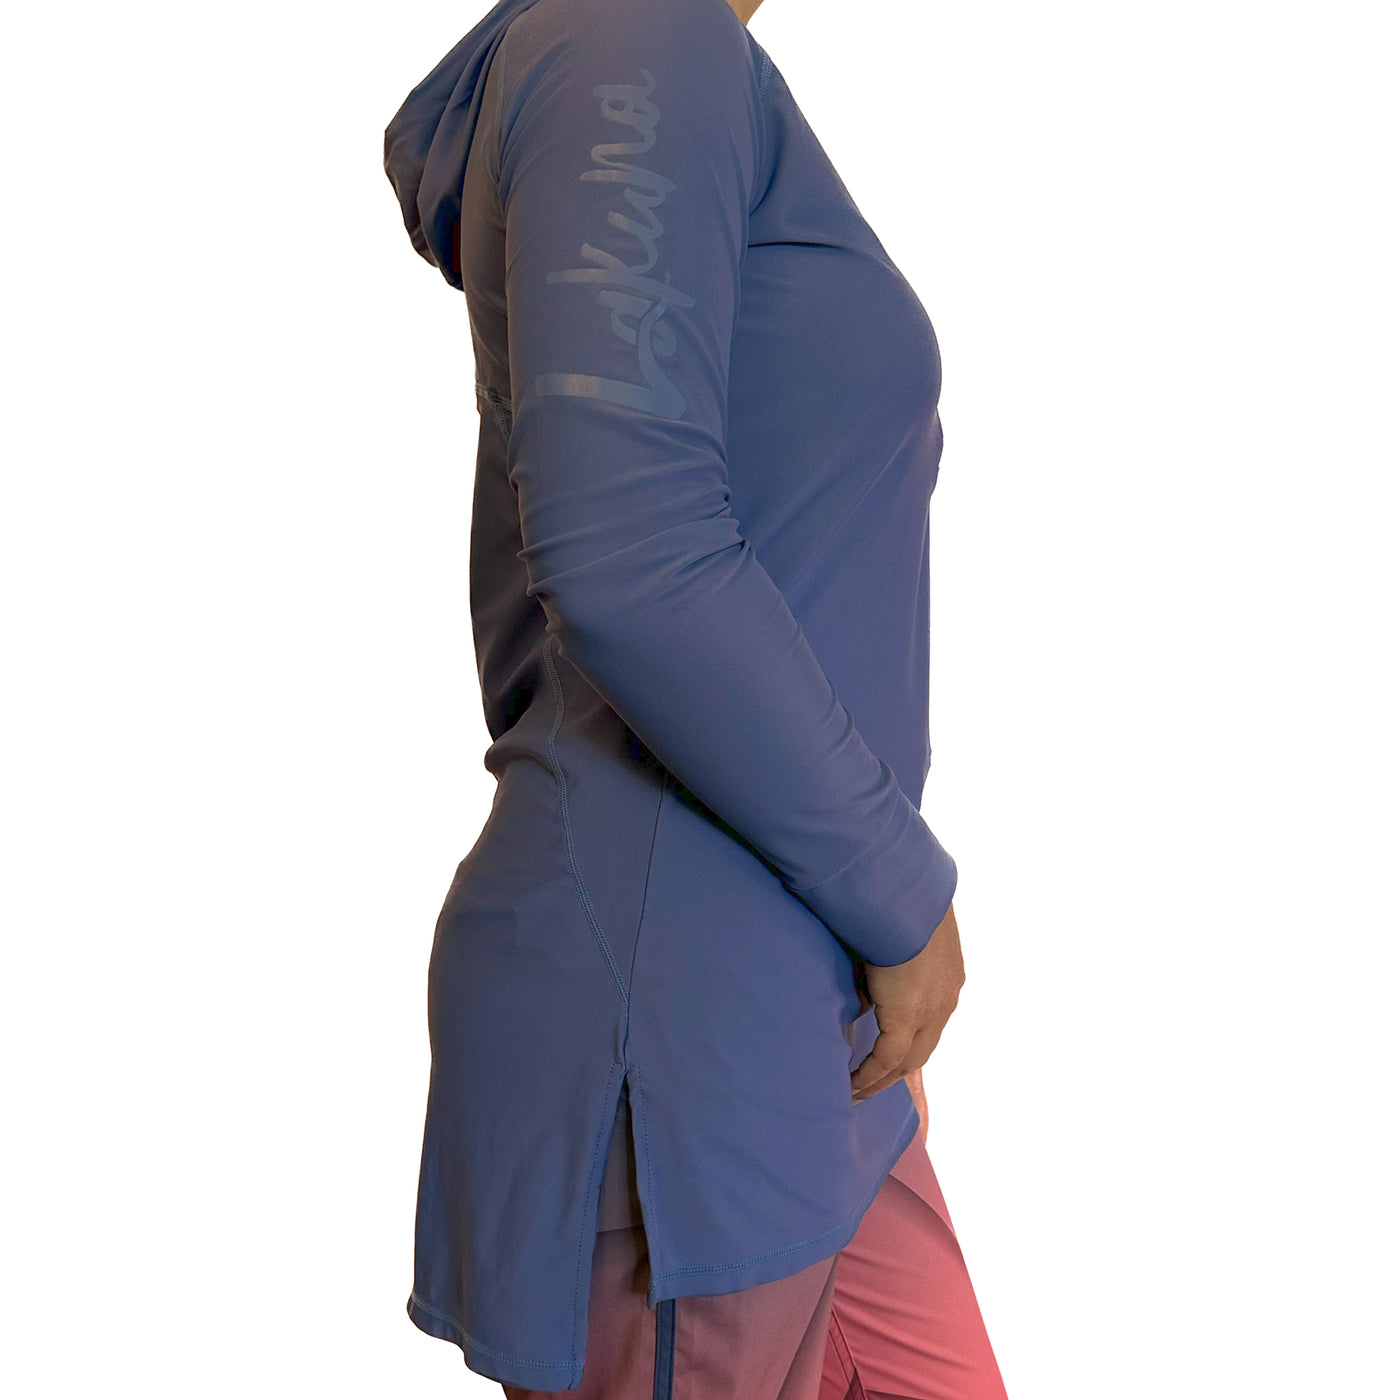 New Blue Hooded Swim tunic